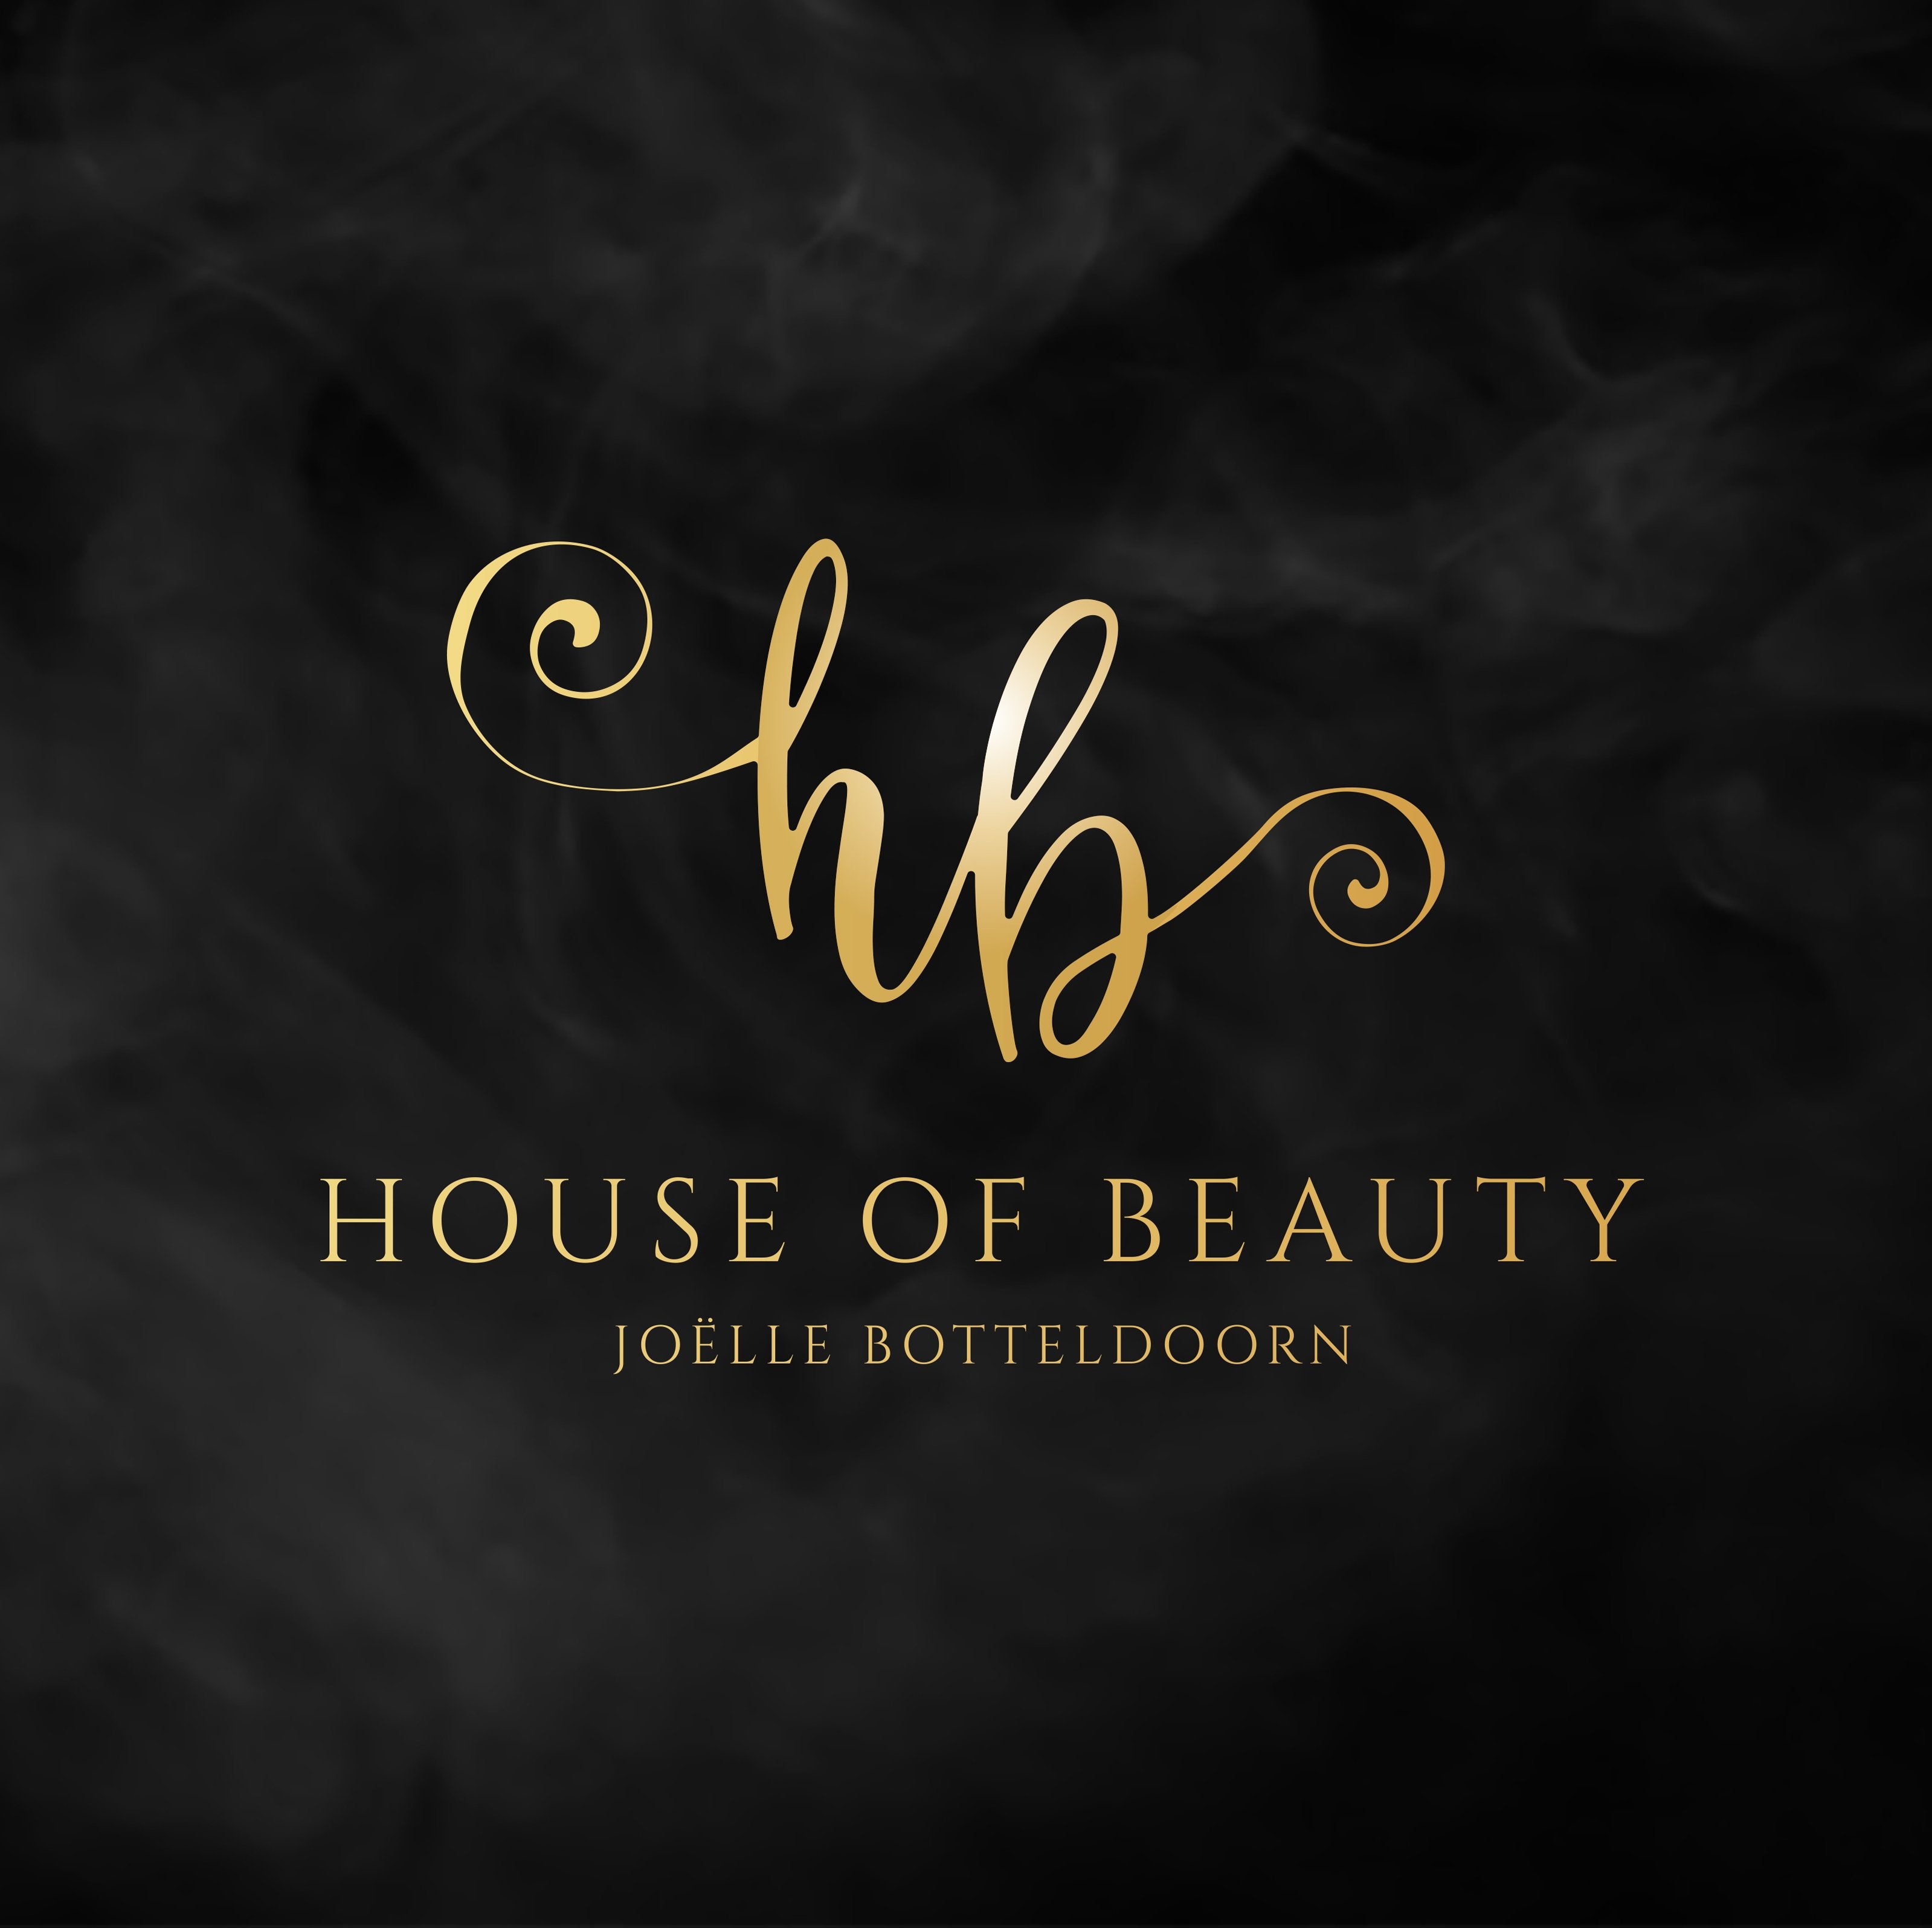 House of Beauty Joelle